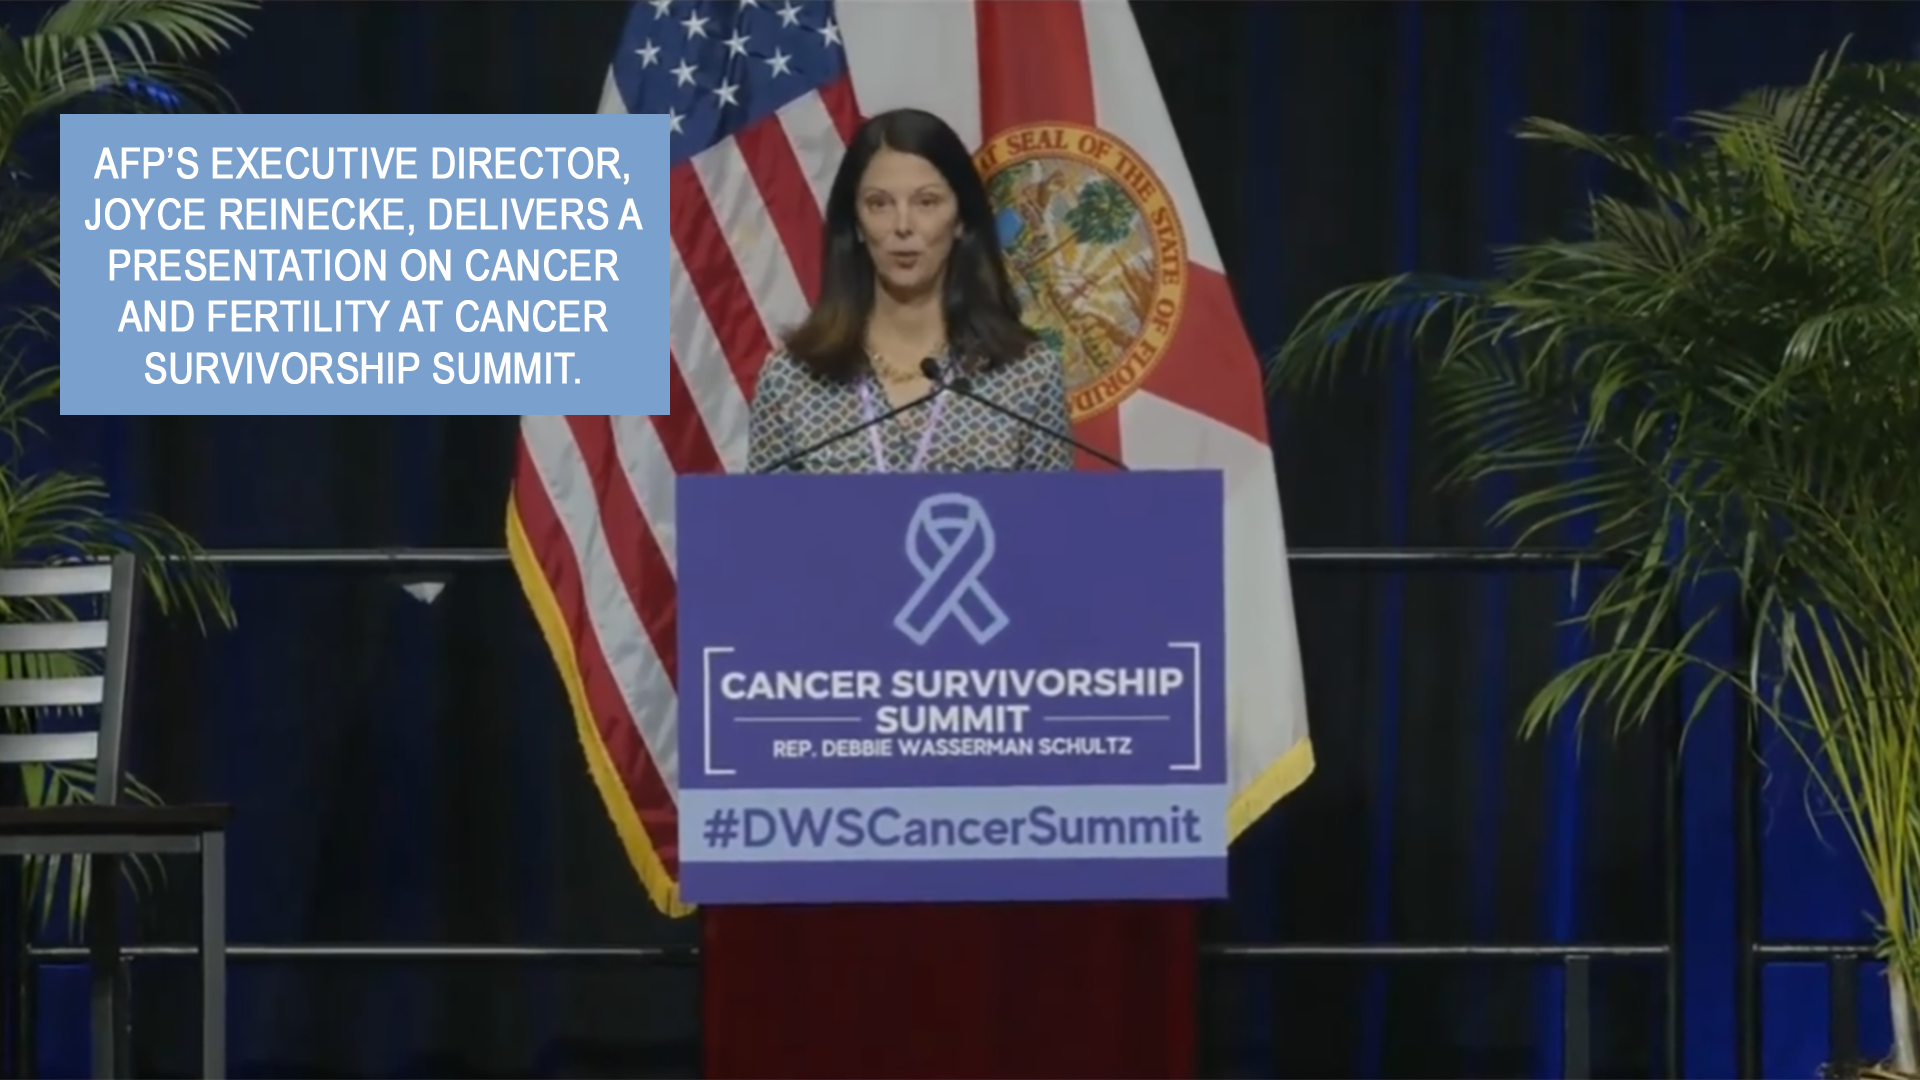 AFP Executive Director, Joyce Reinecke, Delivers A Presentation on Cancer And Fertility At Cancer Survivorship Summit